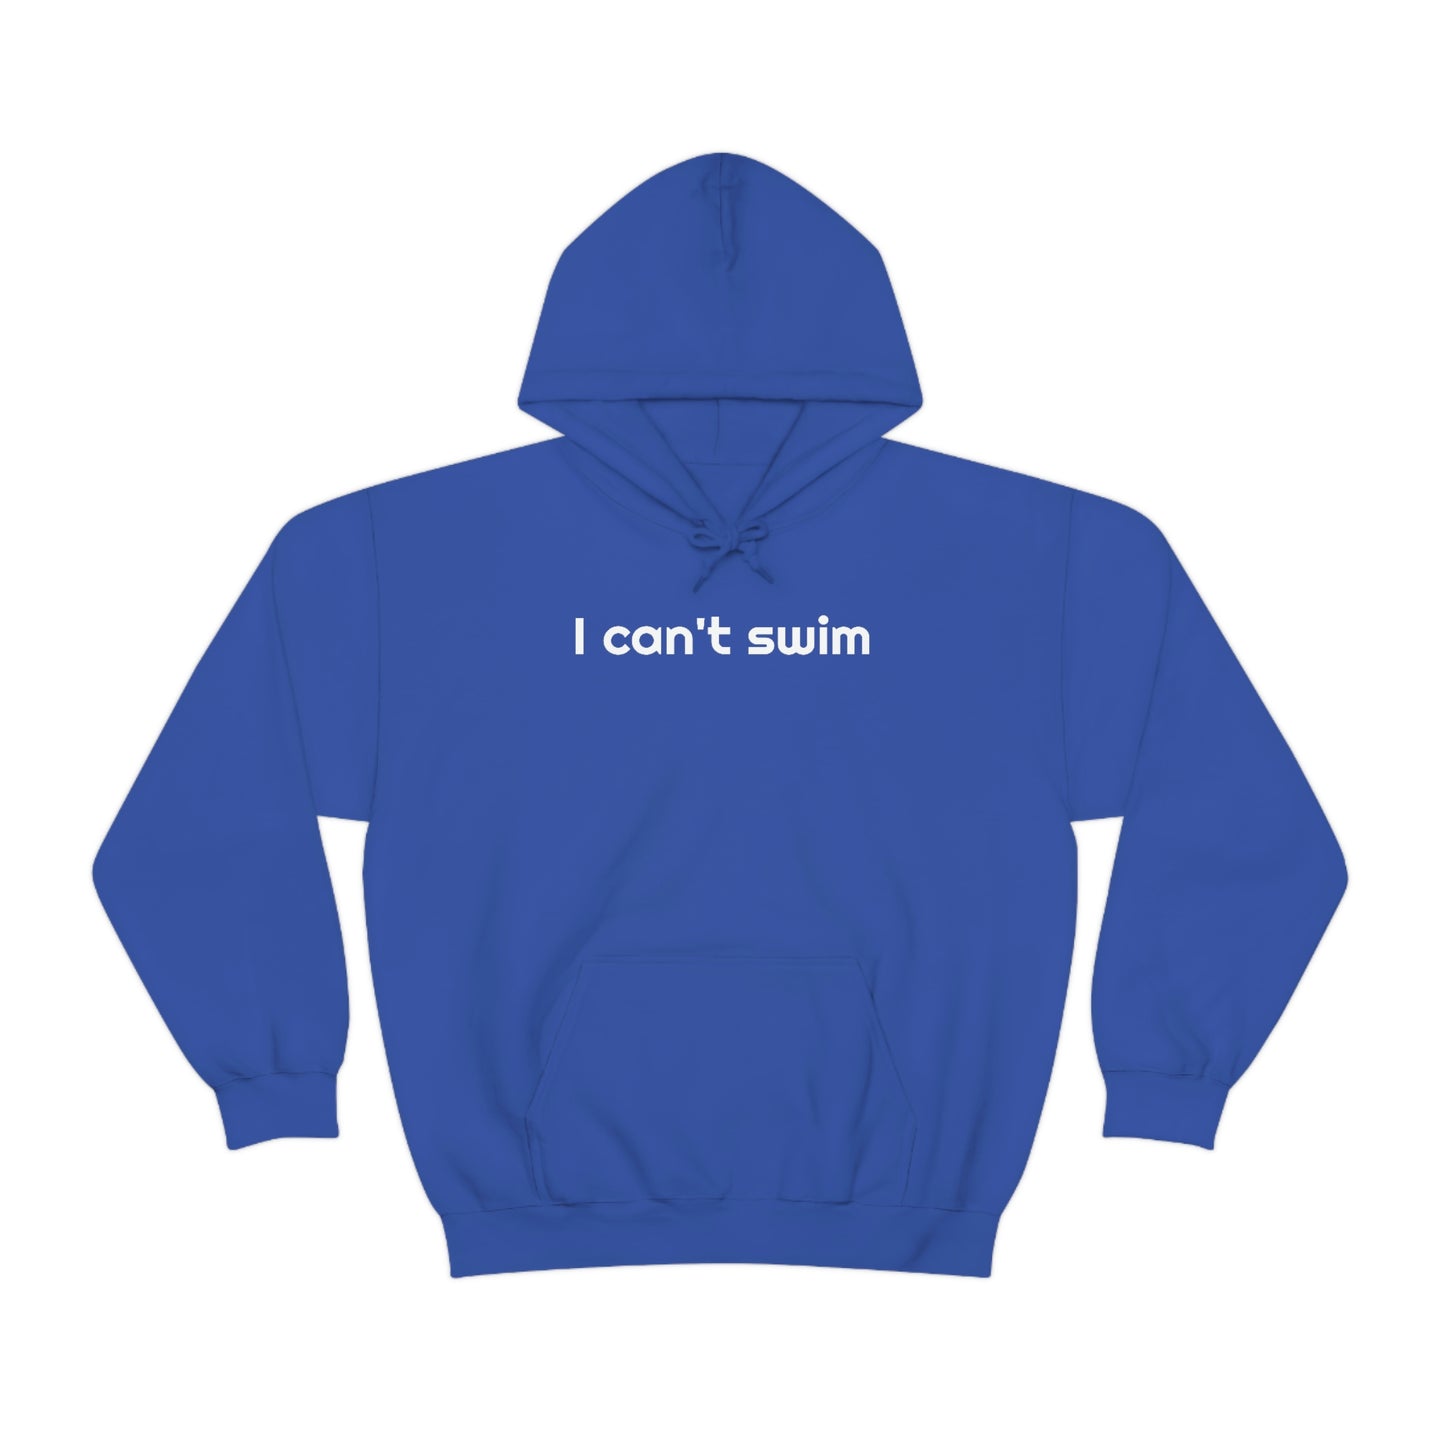 I can't swim blue hoodie